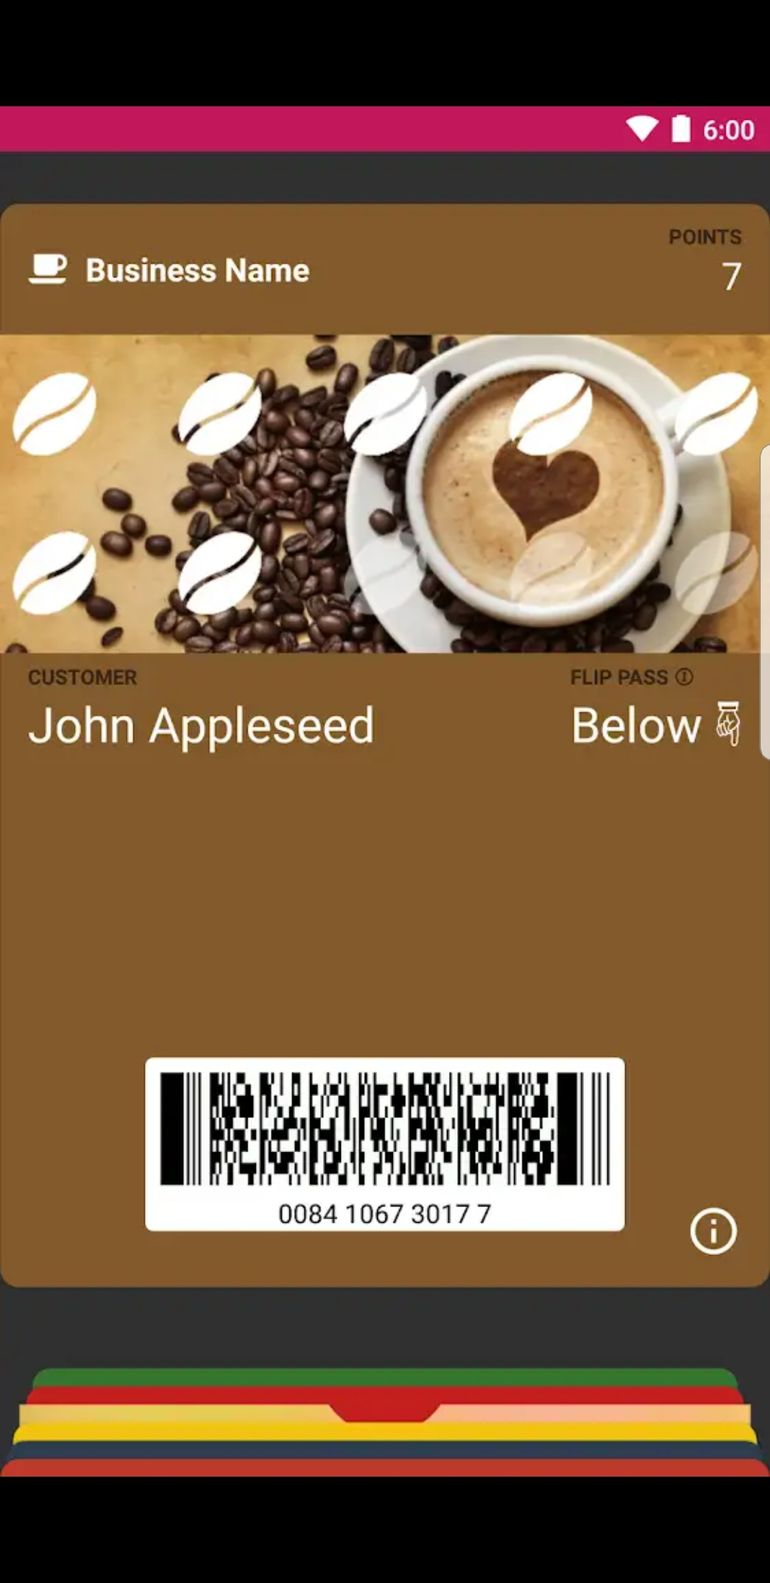 loyalty cards in passeswallet app